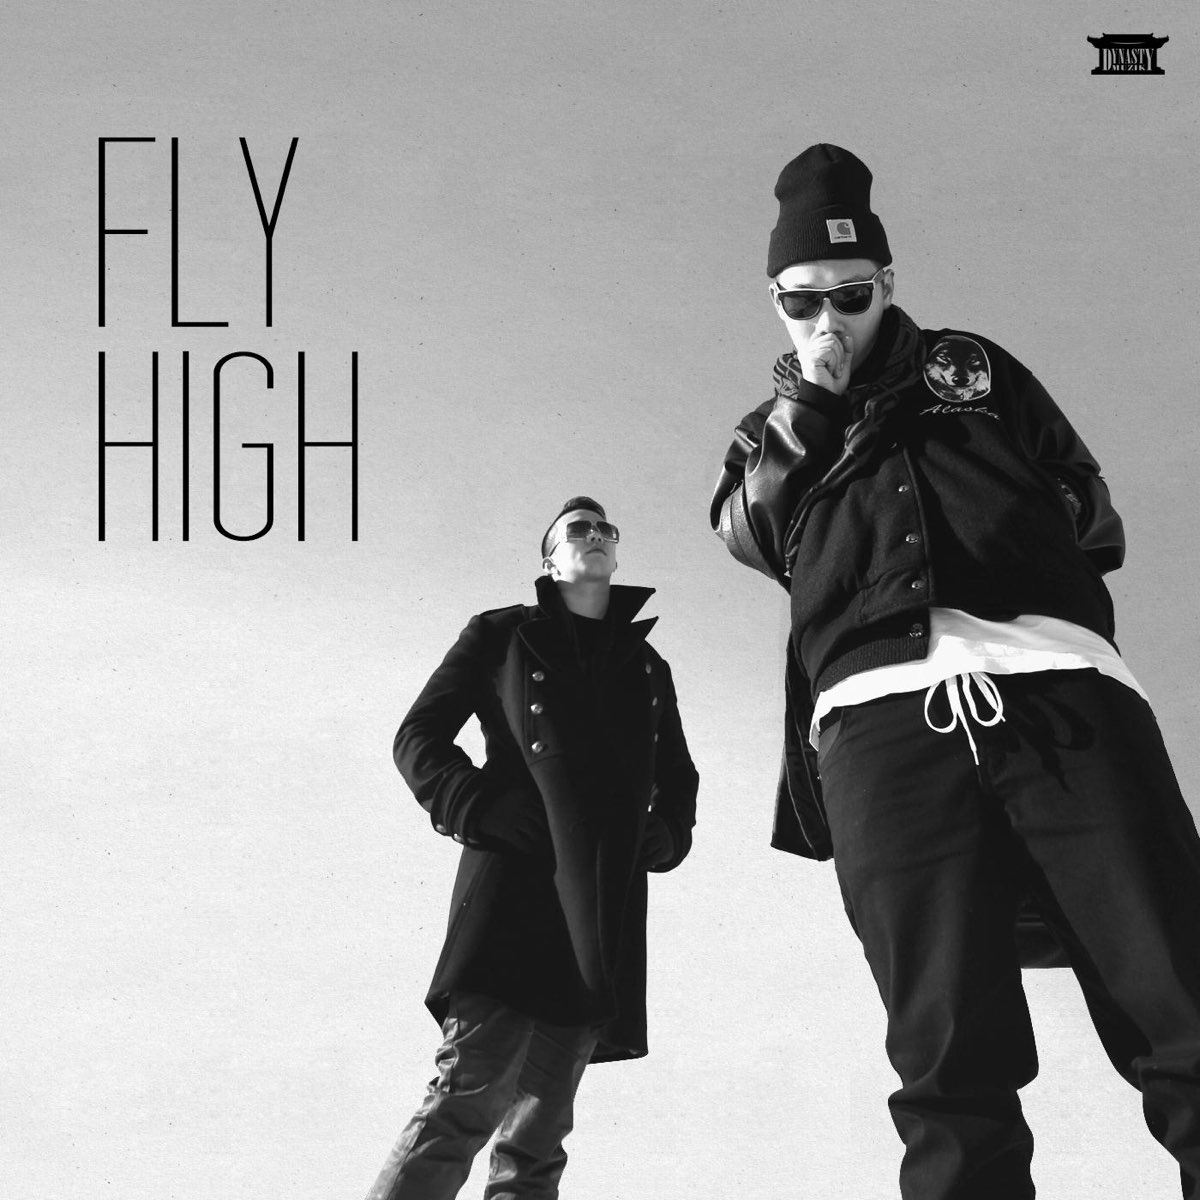 Fly high man